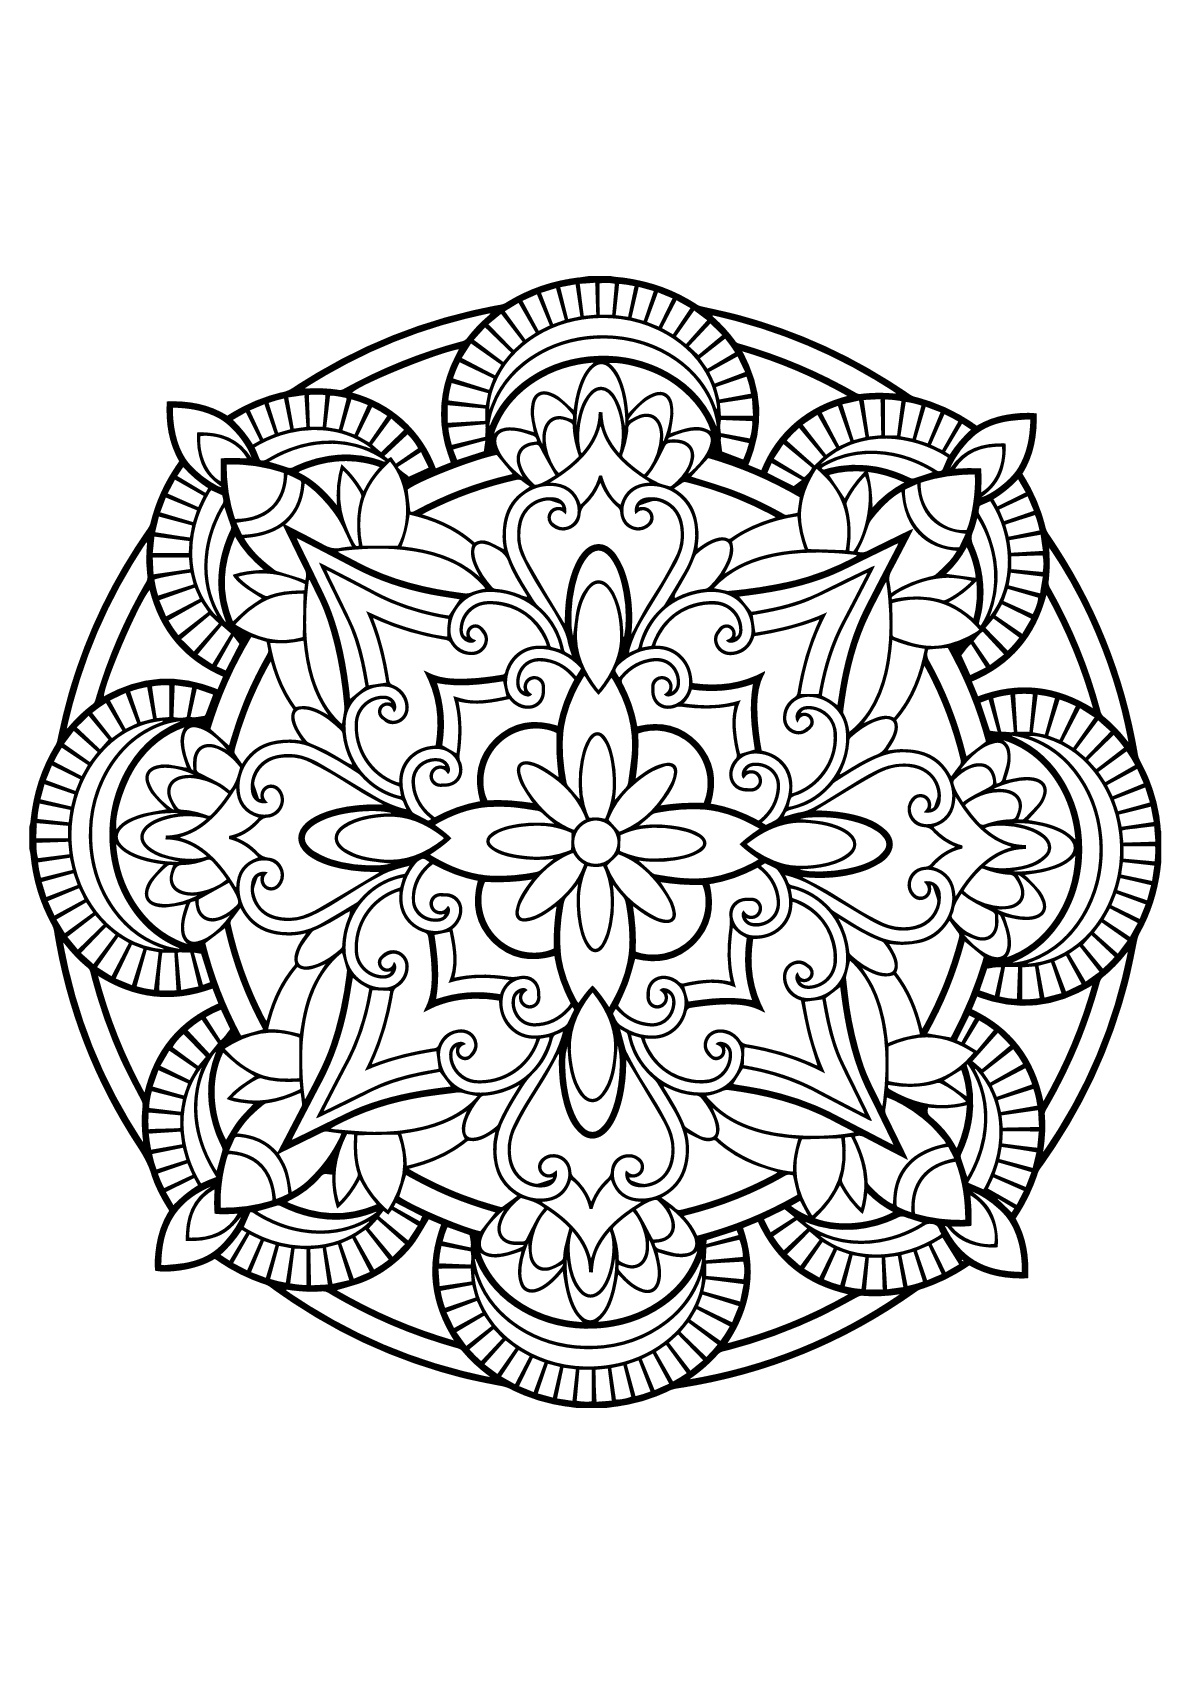 Download Mandala from free coloring books for adults 23 - Mandalas ...